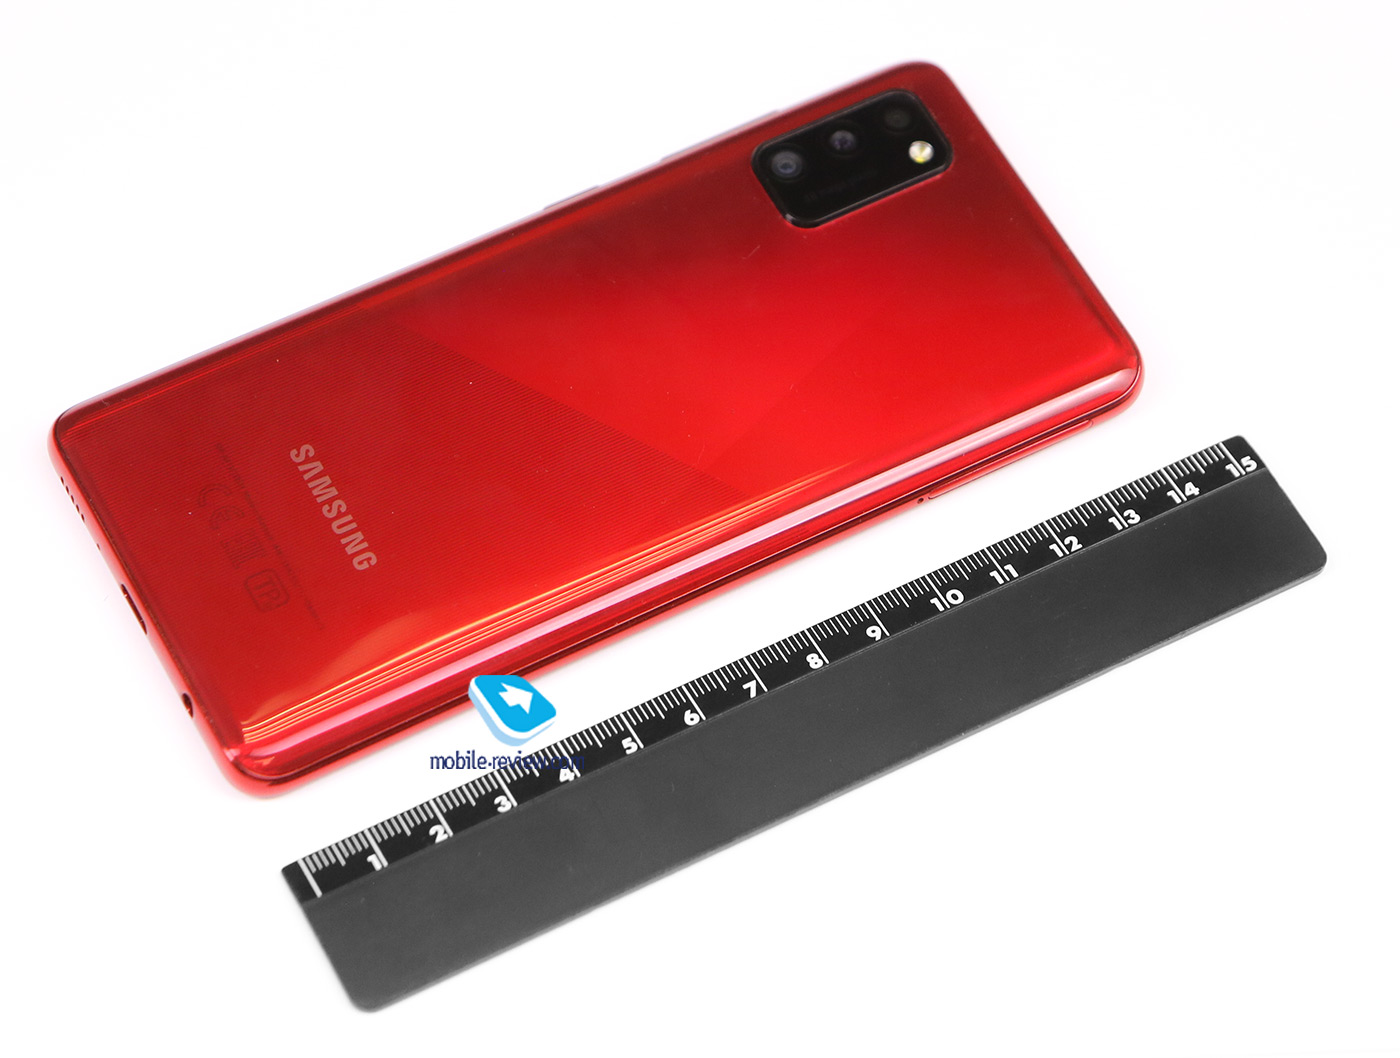 Samsung Galaxy A41 Smartphone Review (SM-A415F/DSM)